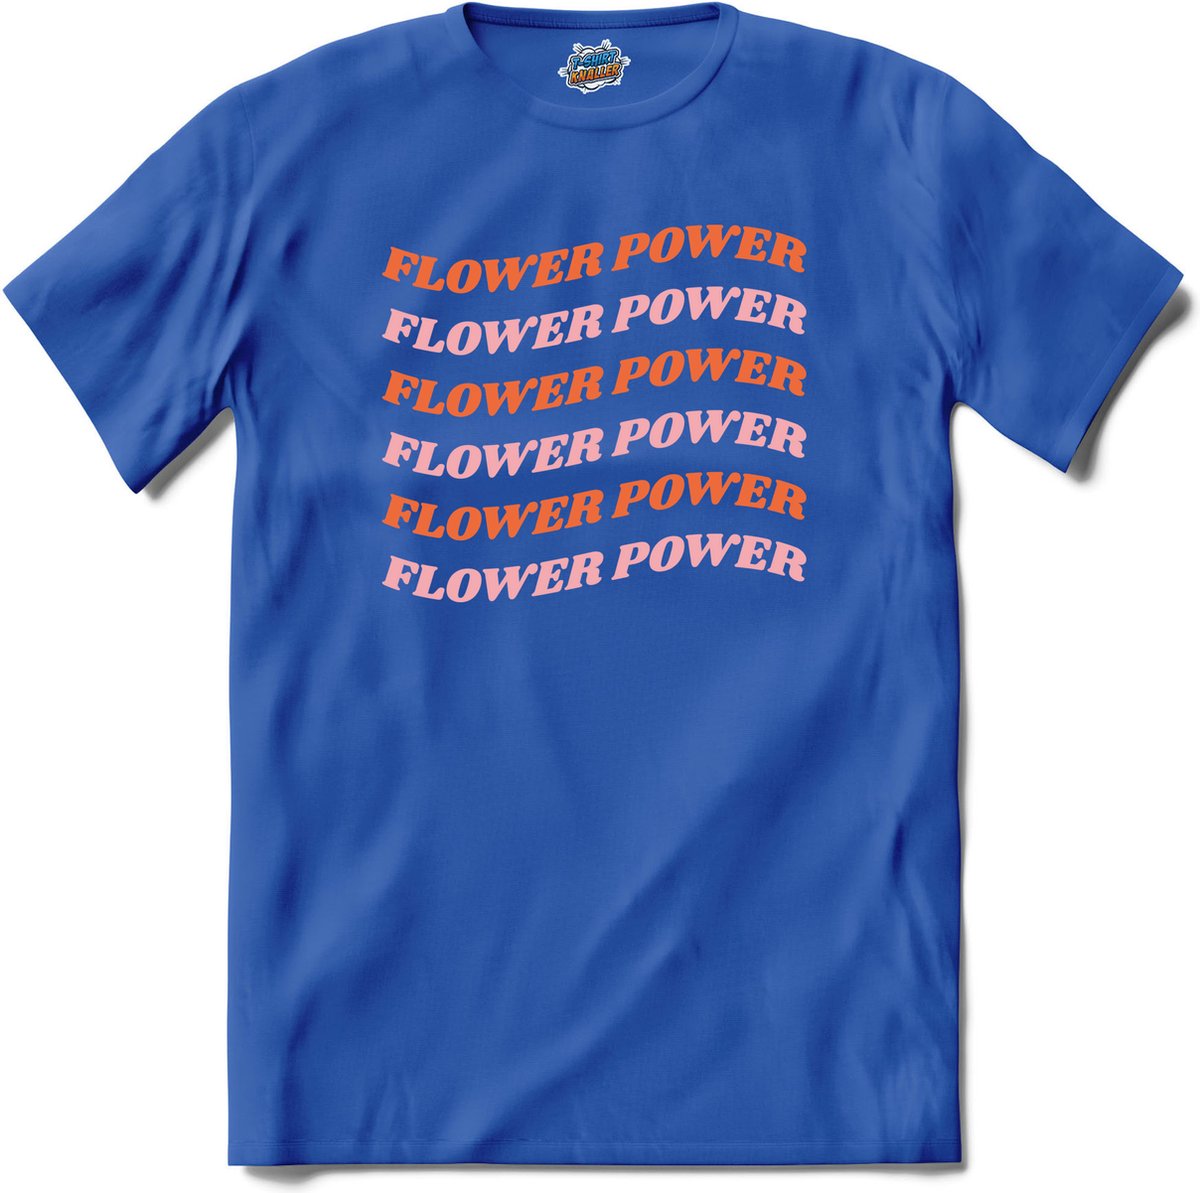 Flower power - T-Shirt - Meisjes - Royal Blue - Maat 6 jaar